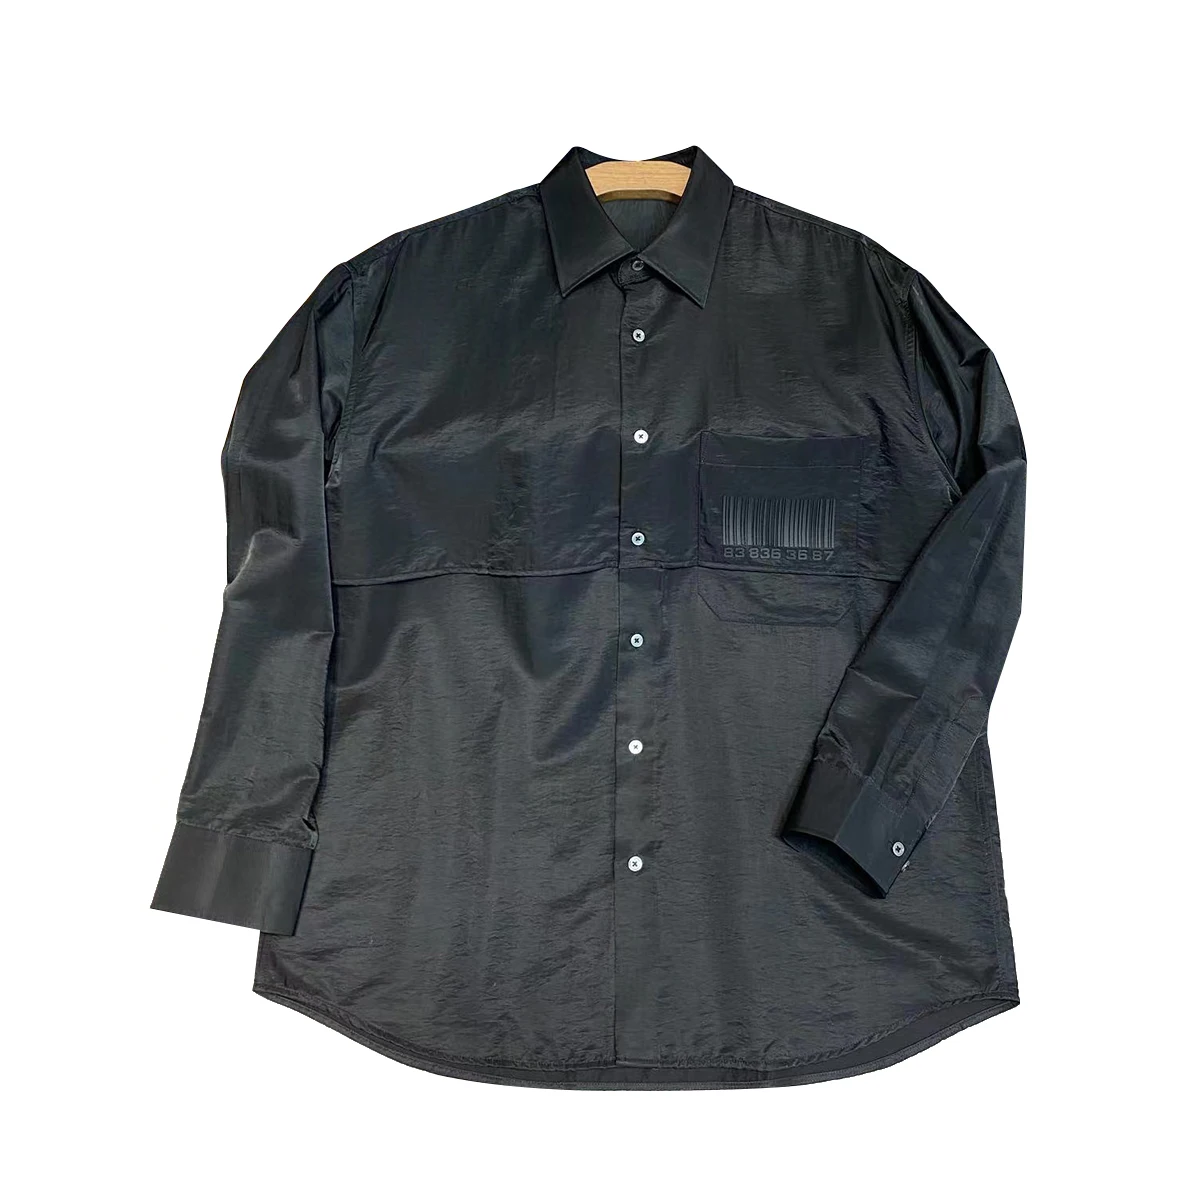 NIGO שחור מודפס חולצת שרוול ארוך Ngvp #nigo6327 . ' - ' . 0